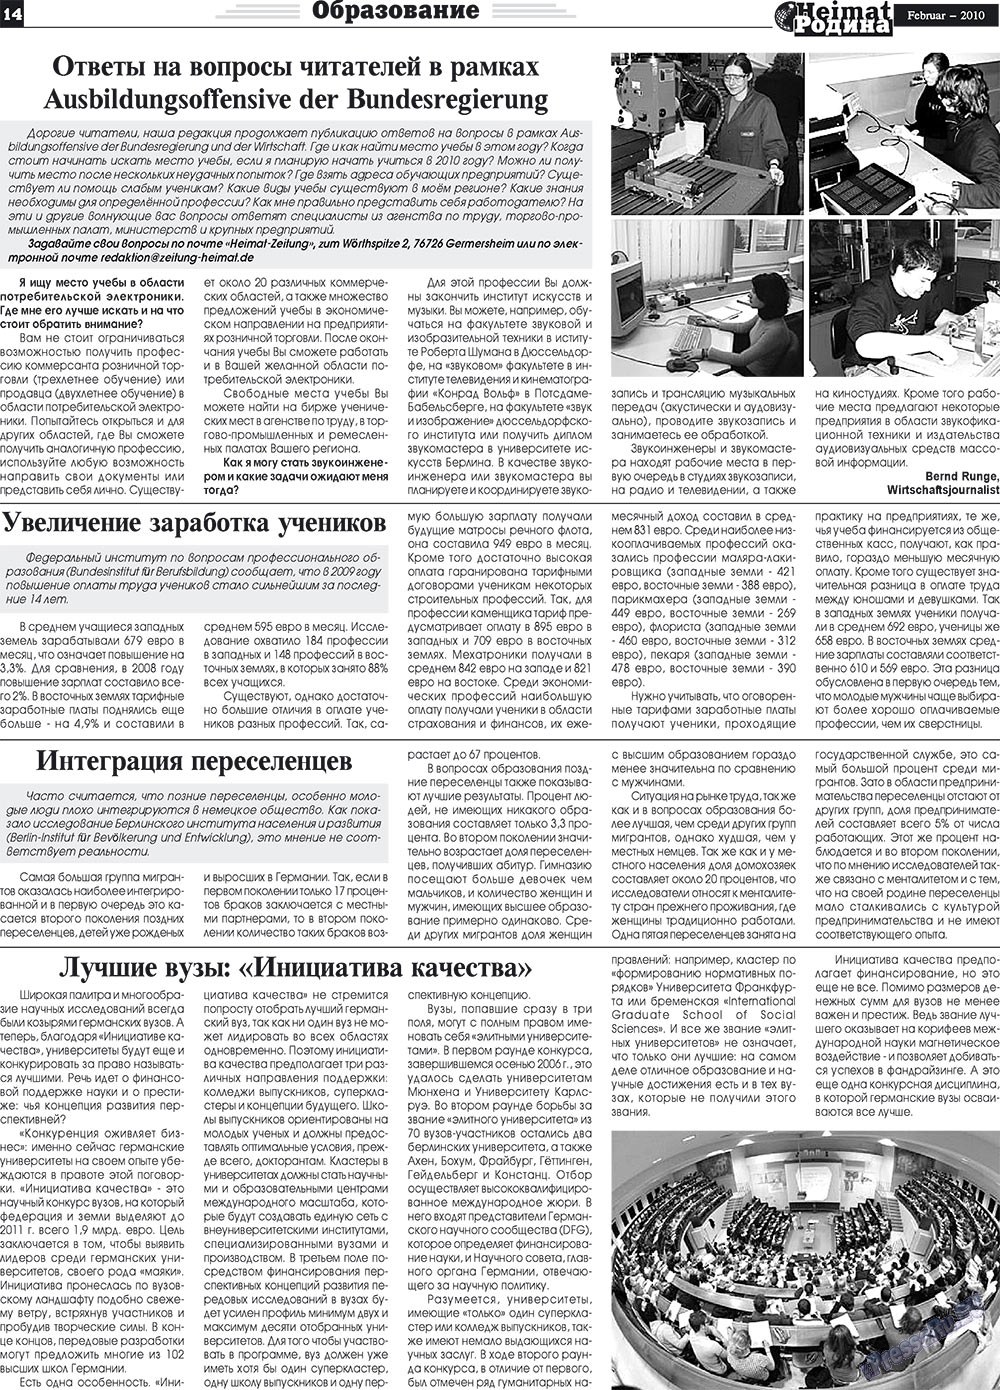 Heimat-Родина, газета. 2010 №2 стр.14